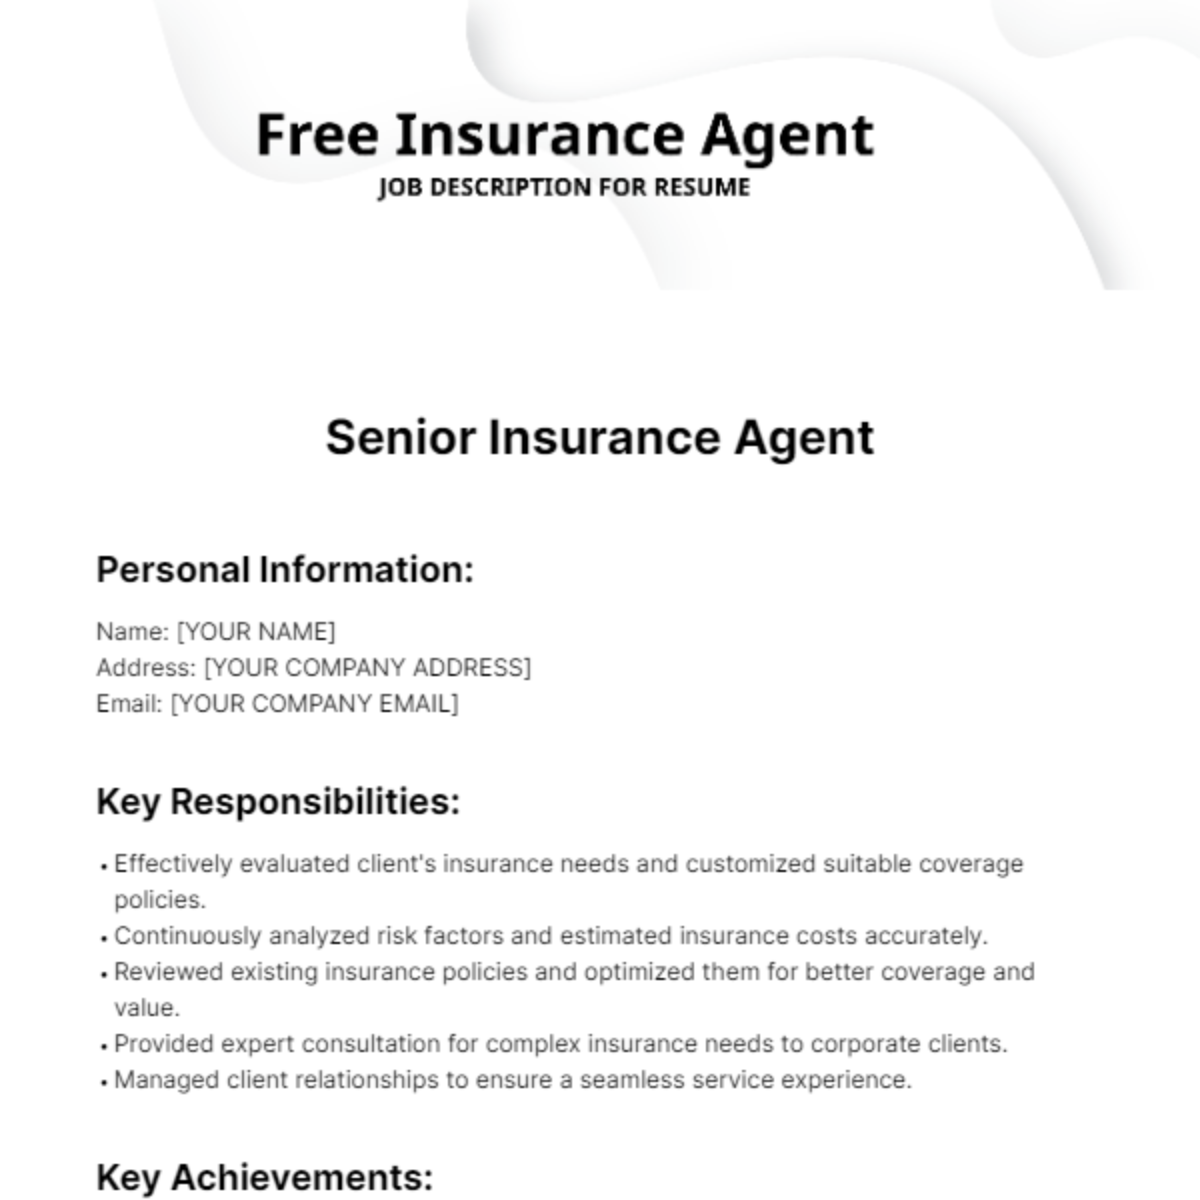 Free Insurance Agent Job Description for Resume Template